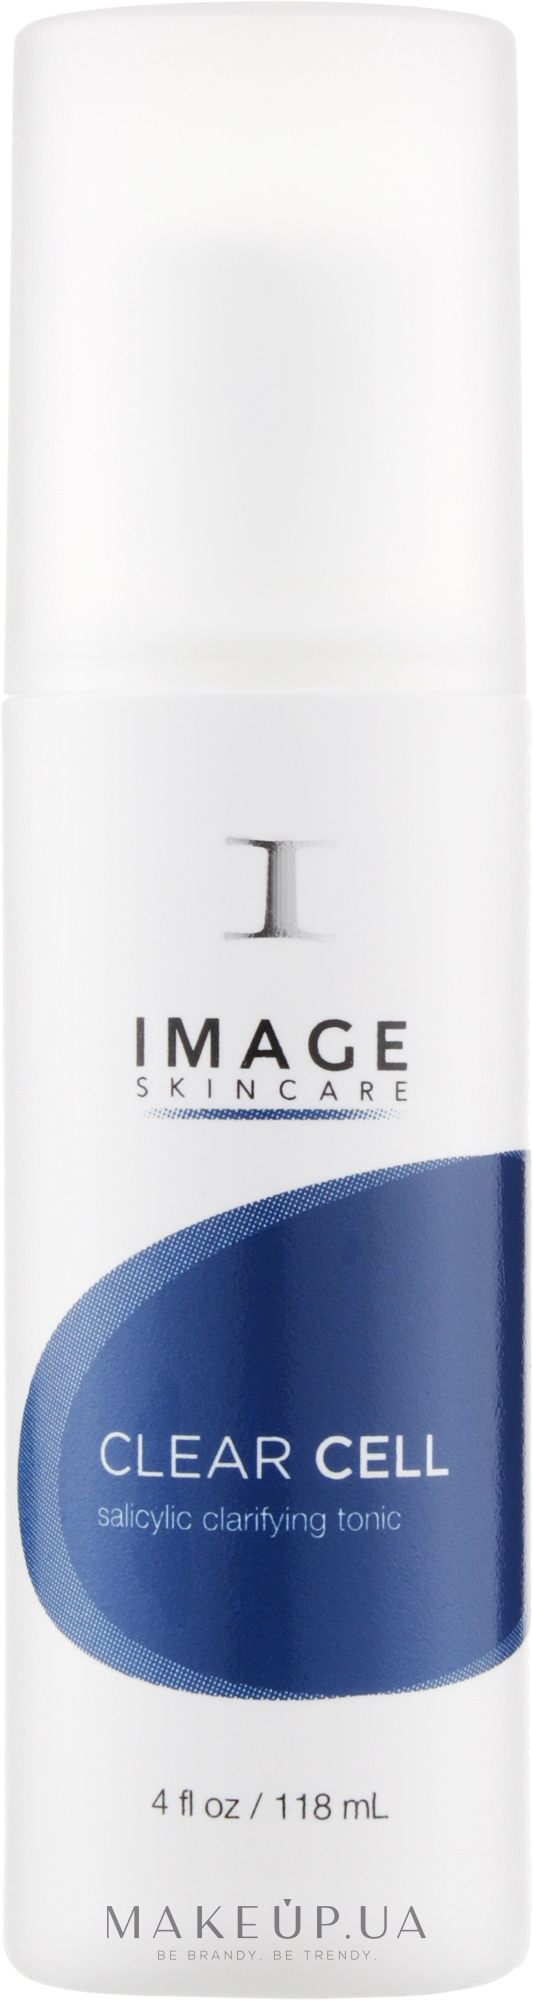 Активный салициловый тоник для лица - Image Skincare Clear Cell Salicylic Clarifying Tonic — фото 118ml